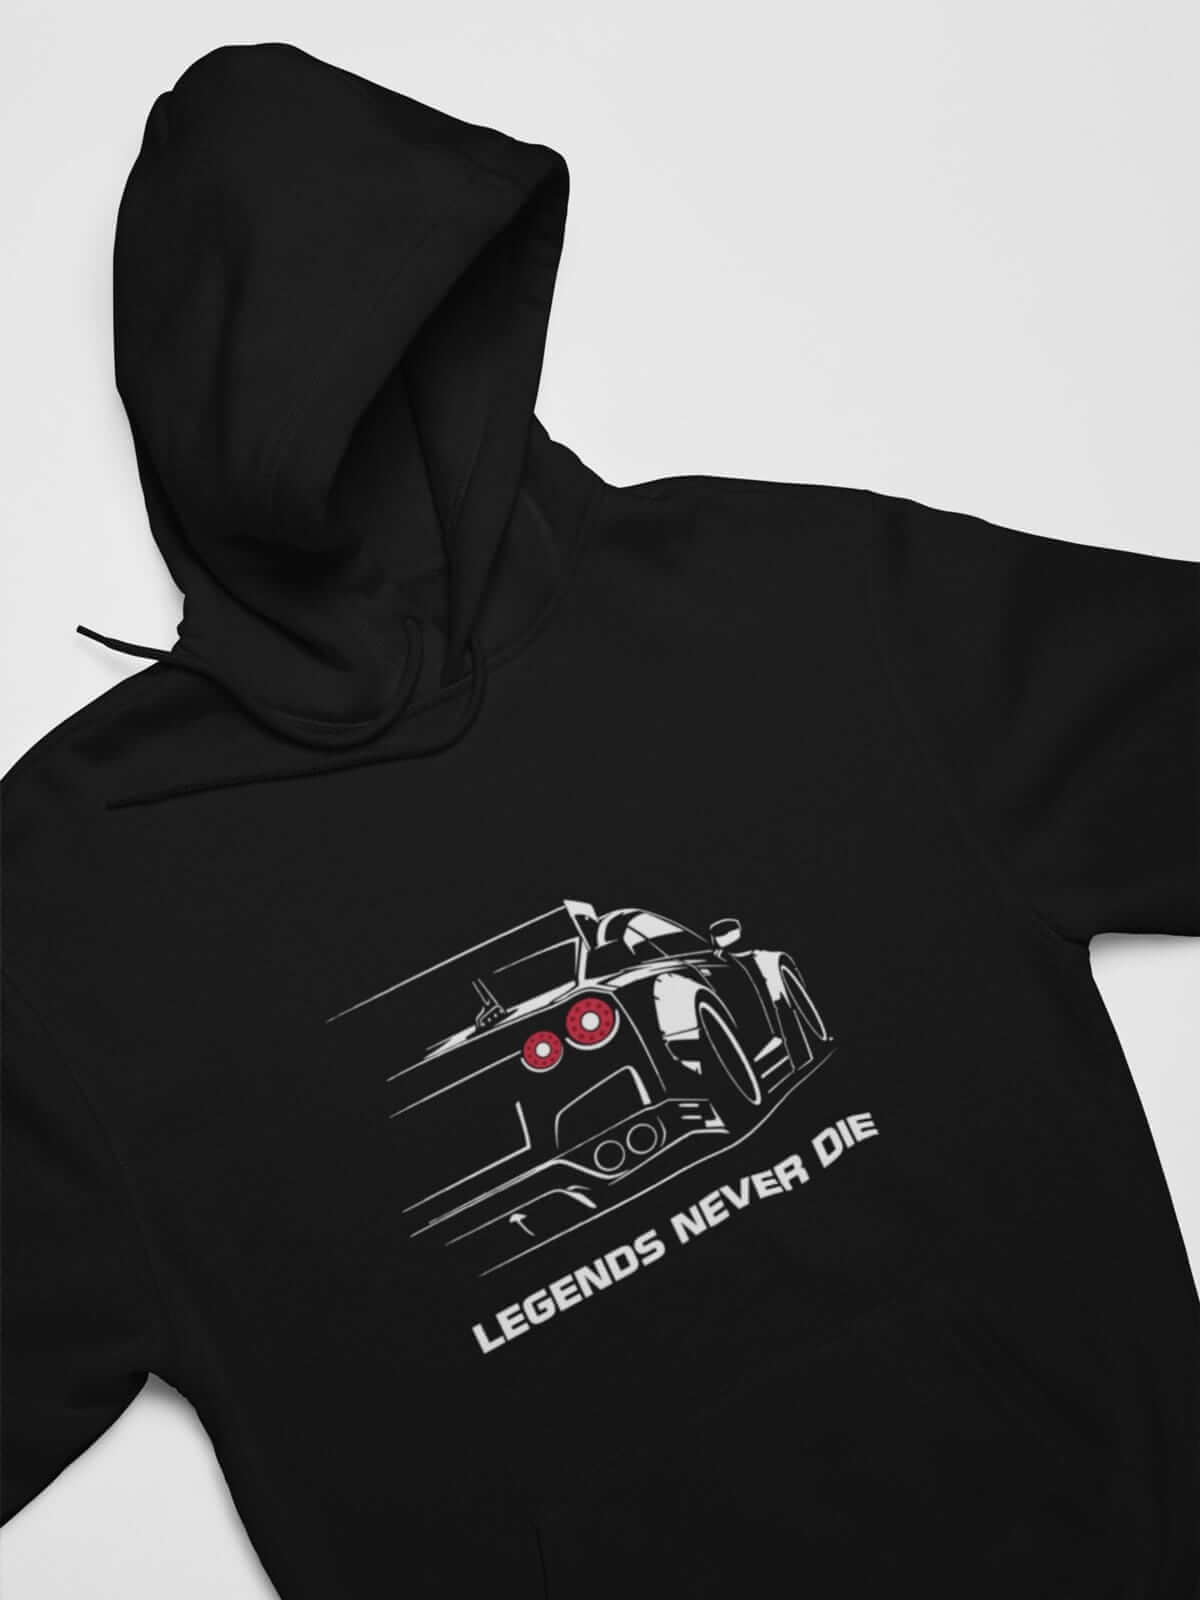 Japanese car printed on black car hoodie, JDM hooded sweatshirt, car guy gift, car lover present, car fan, car enthusiast